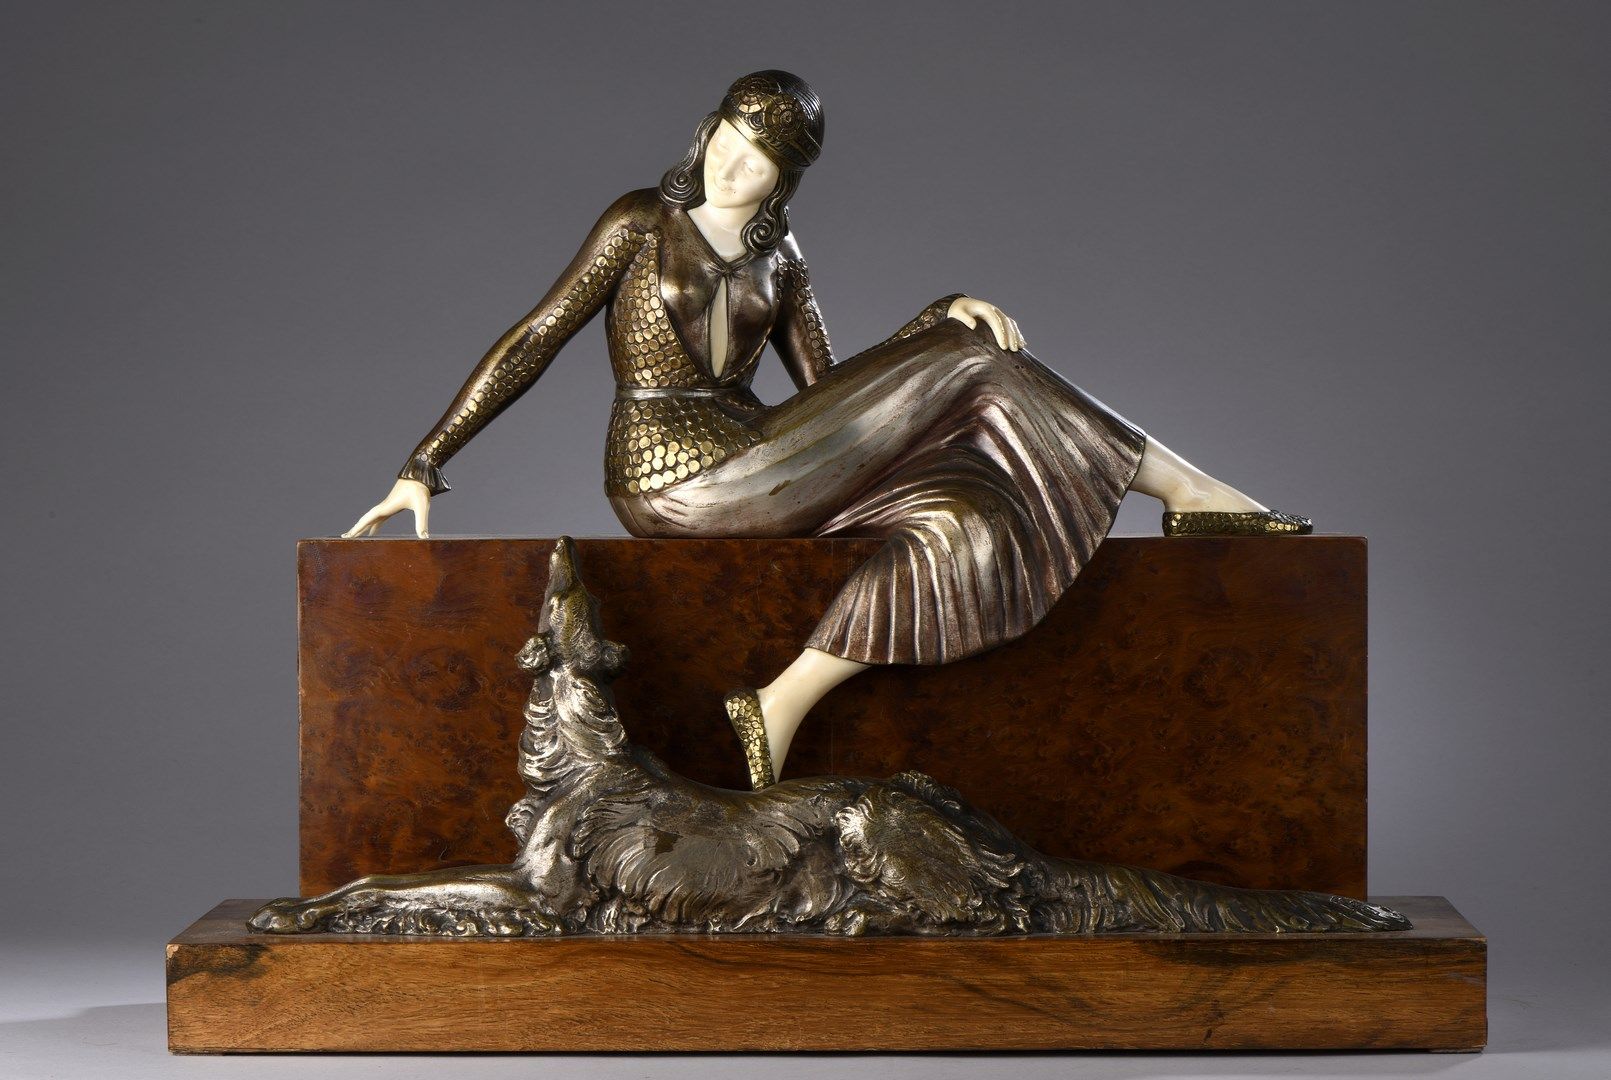 Null 阿尔芒-莱莫 (1881 - 1936)

"带阿富汗灰狗的女人"。

象牙雕像，头部、手部、胸部和脚部为象牙；衣服、头饰、鞋子和狗为银色和阴影的鎏金&hellip;